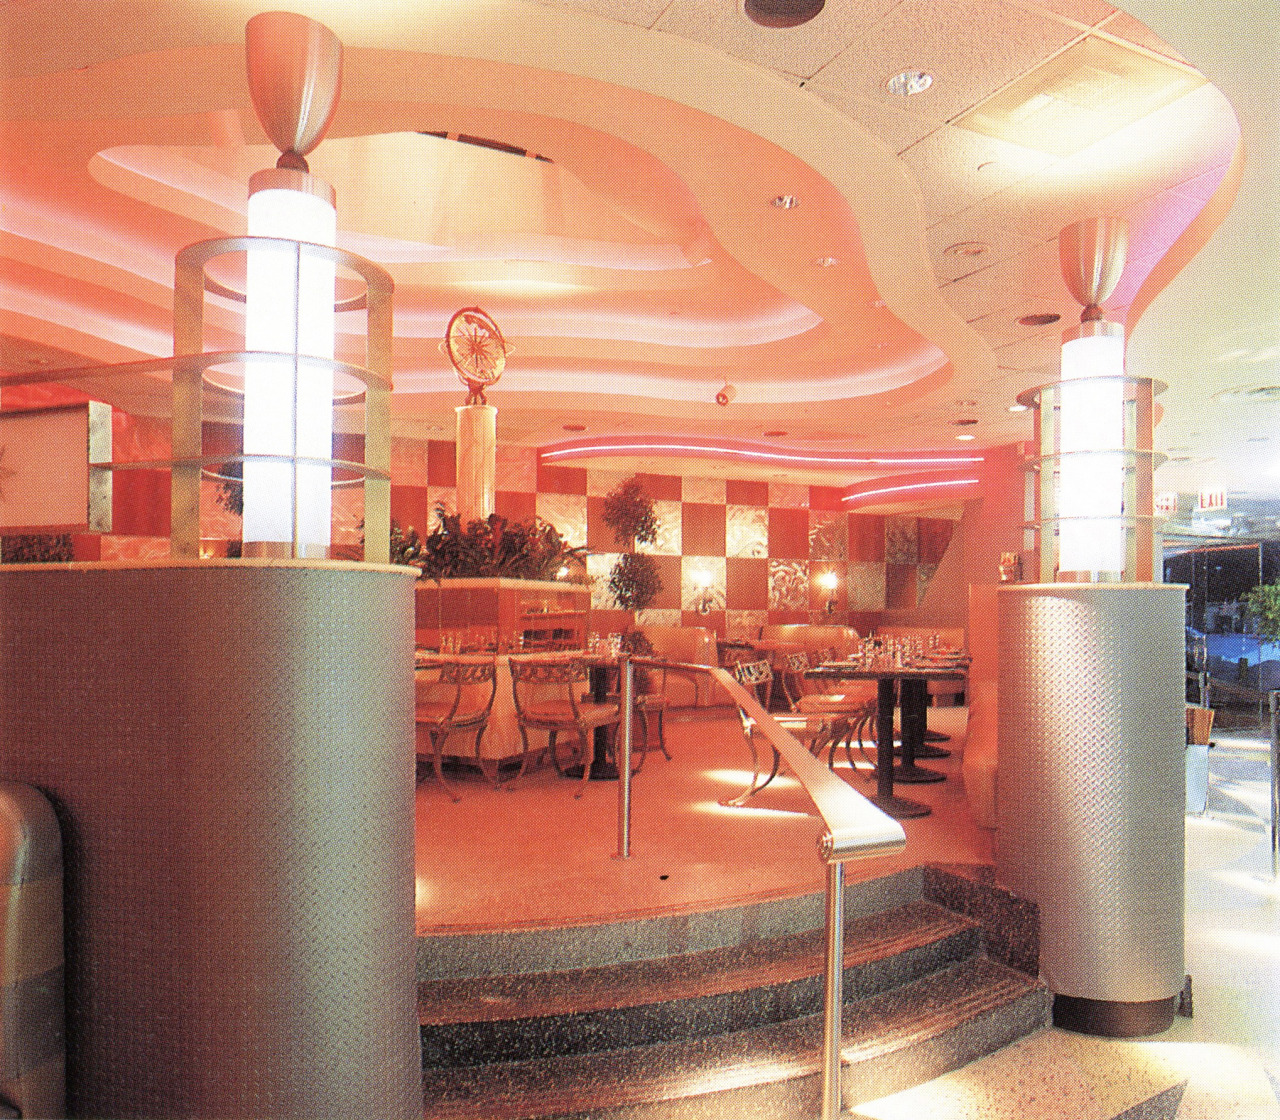 Y2K Aesthetic Institute: Arcades in 1993